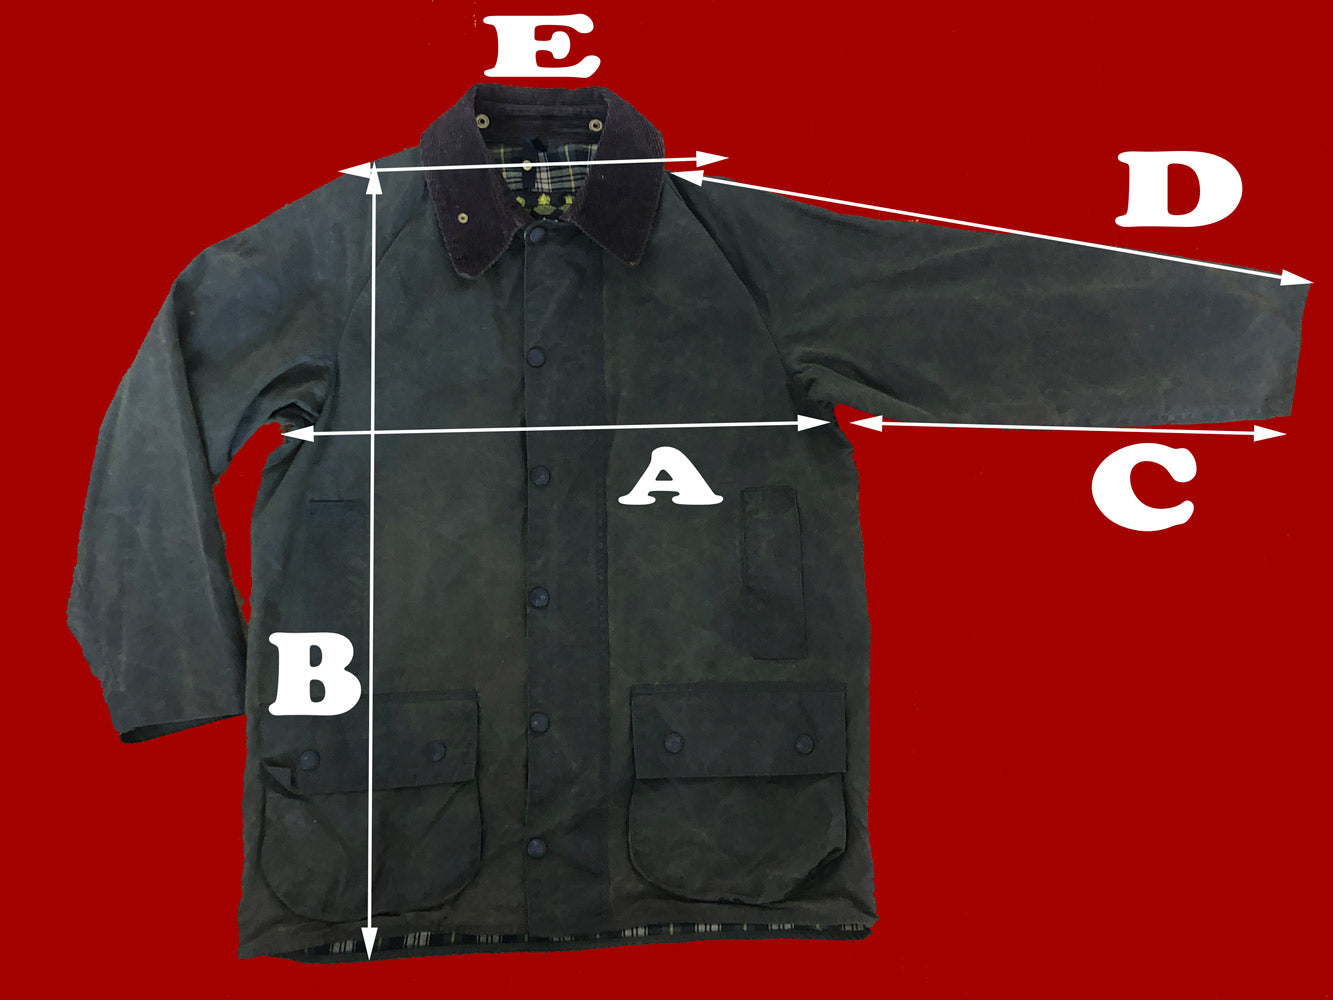 Giacca Uomo Barbour Cerata Nera Uomo XXLarge Tailored Black Man Jacket Size 2xL